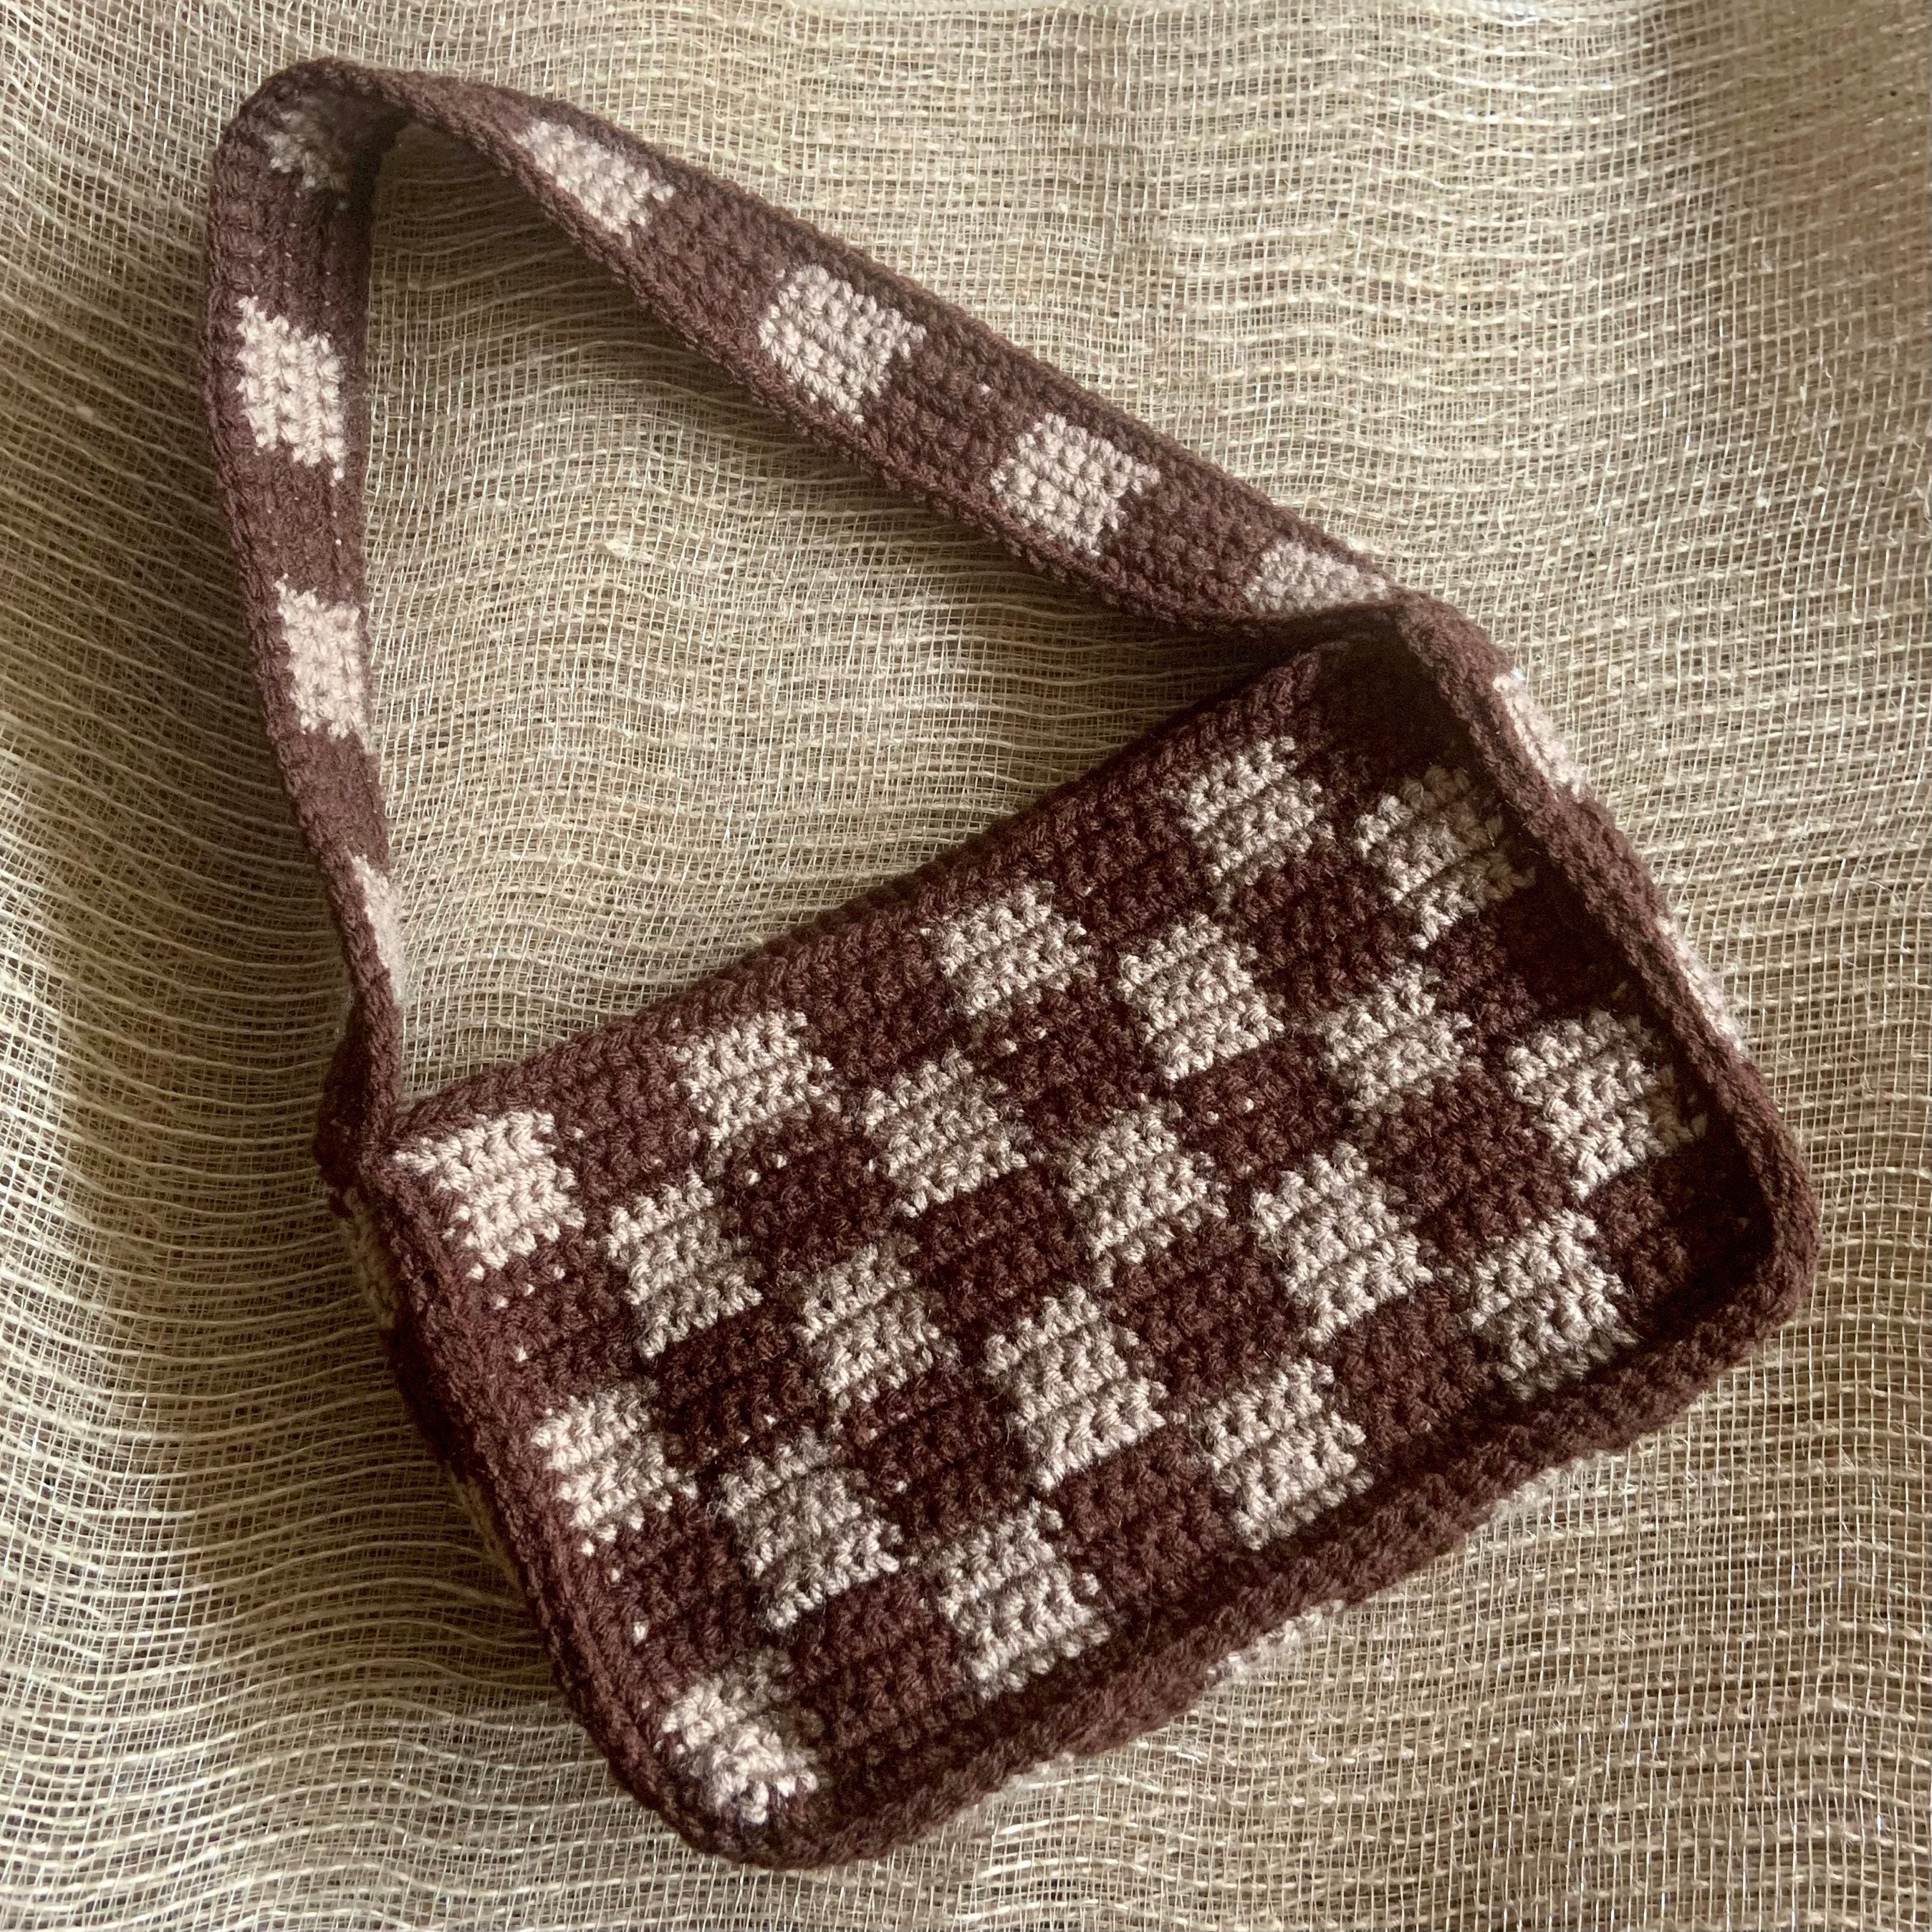  Churi Handmade Checkered Pattern Crochet Tote Bag, Aesthetic  Hobo Shoulder Crochet Beach Bag (Halfmoon Black and White) : Clothing,  Shoes & Jewelry